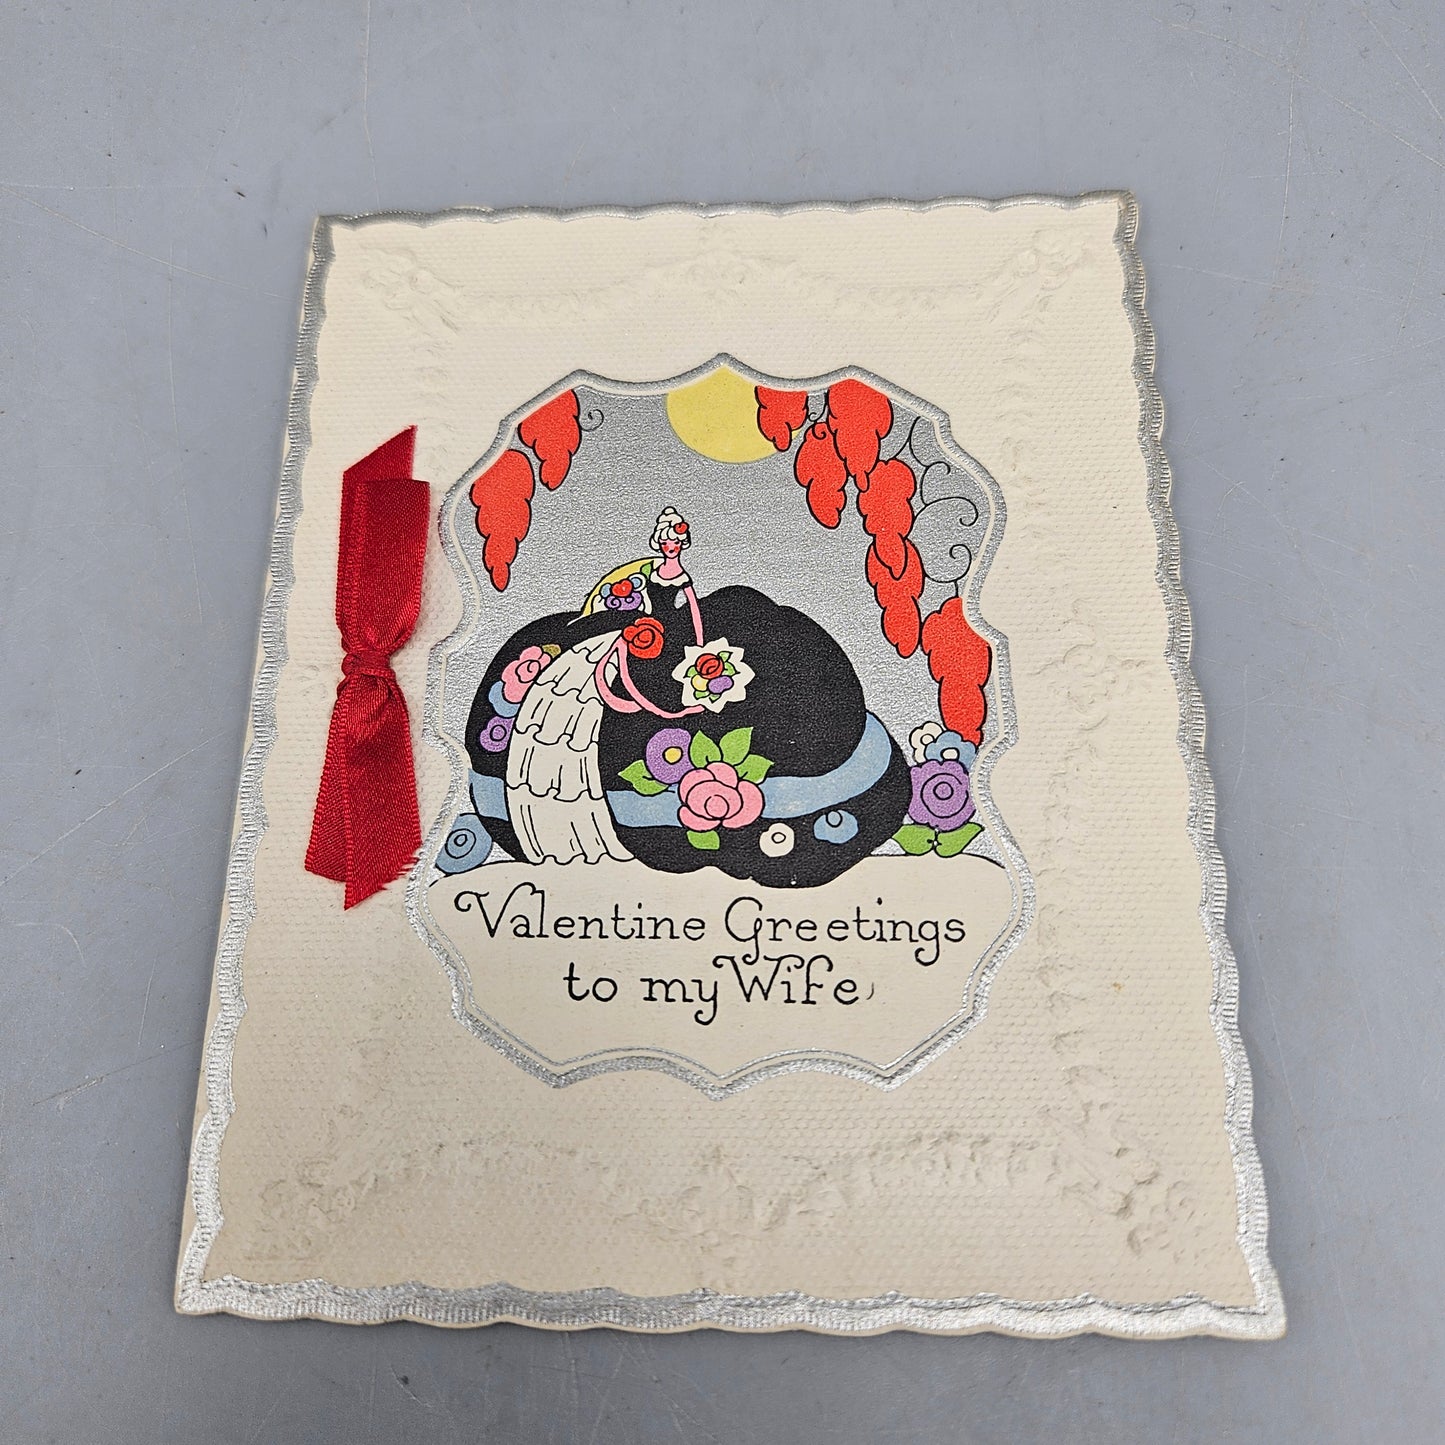 Adorable Vintage Valentine Card "Valentine Greetings to my Wife"